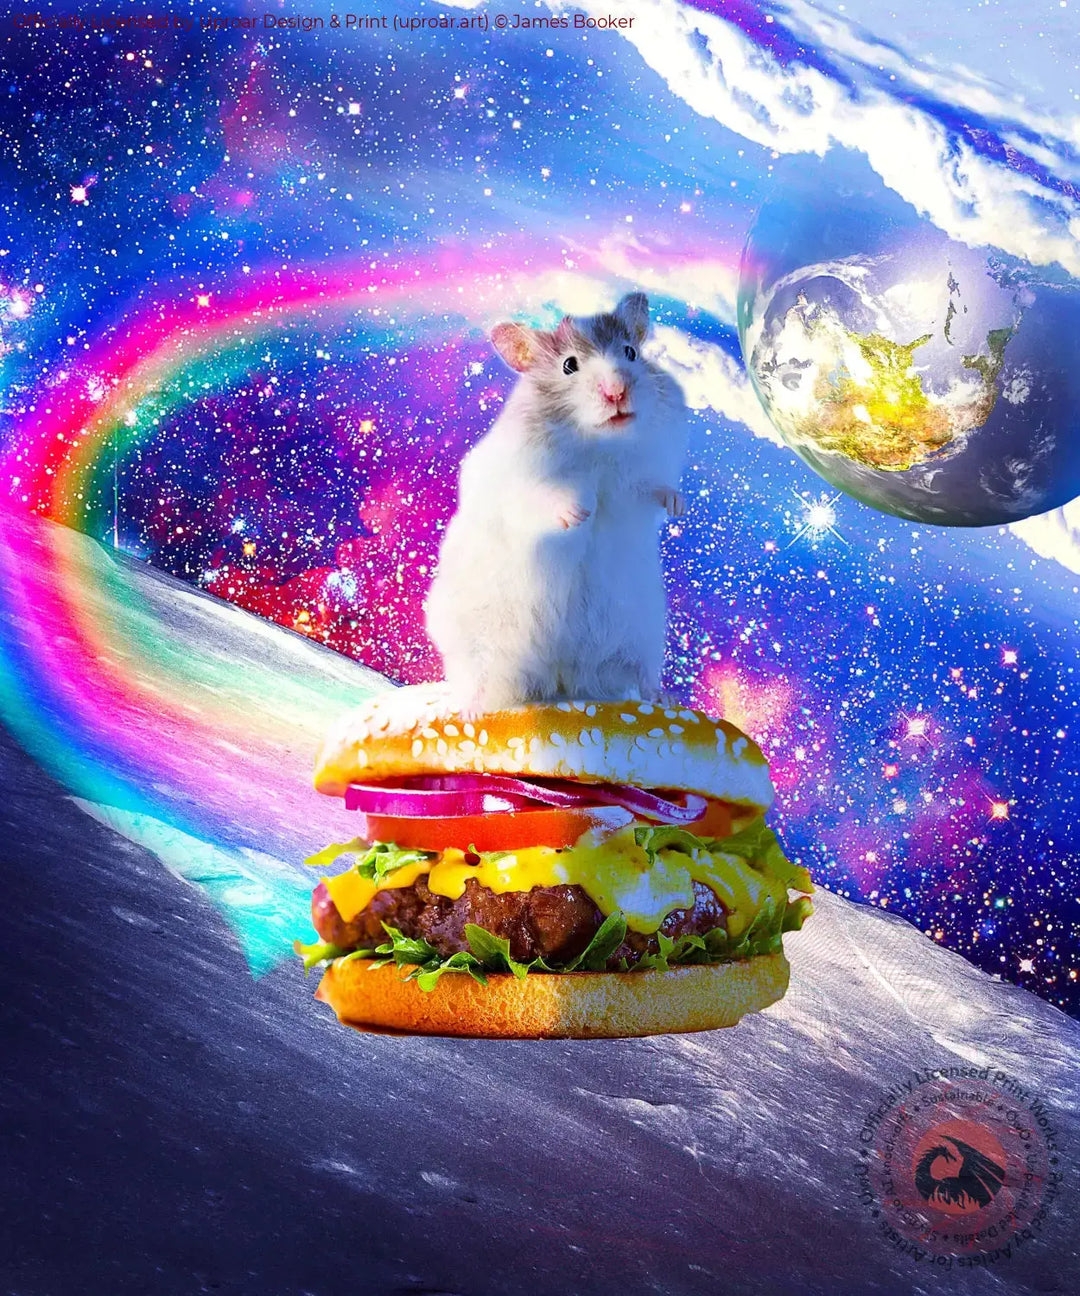 Rainbow Space Hamster Riding Burger James Booker